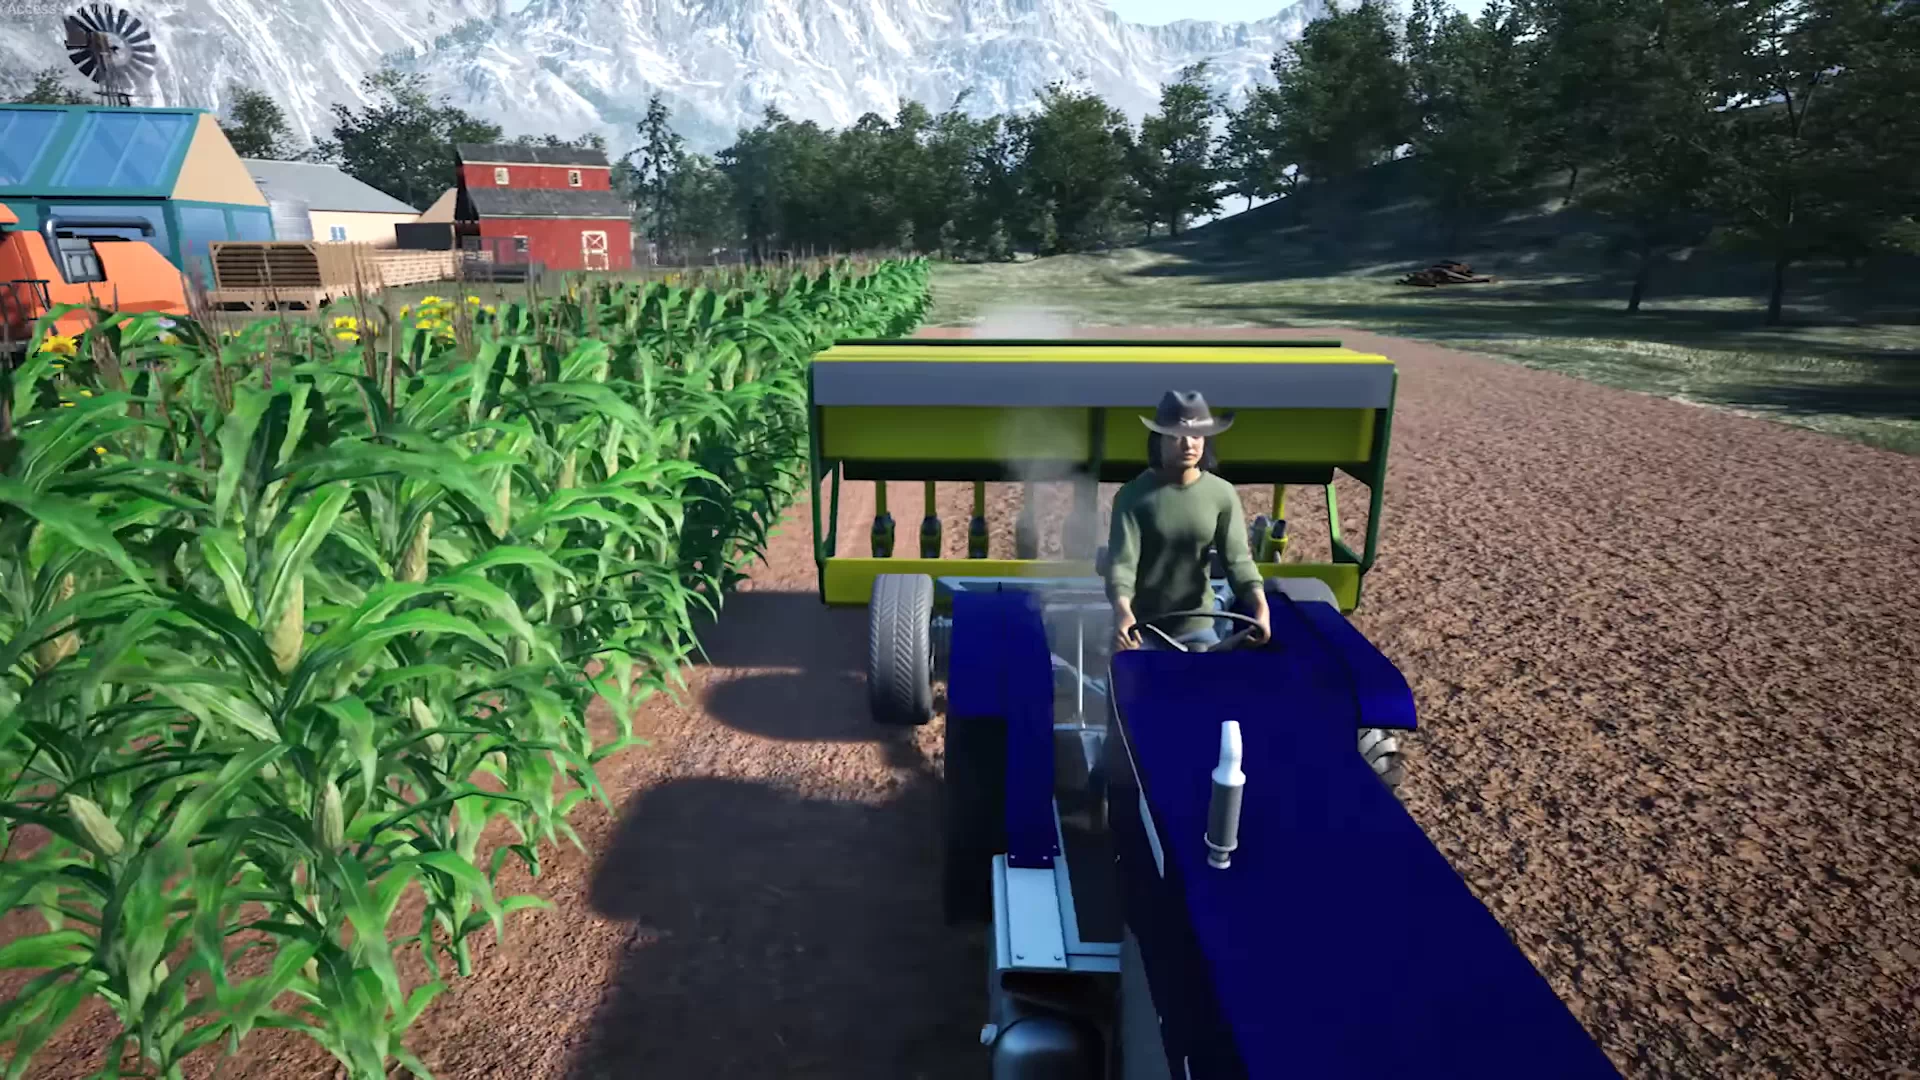 Save 50% on Ranch Simulator - Build, Farm, Hunt on Steam